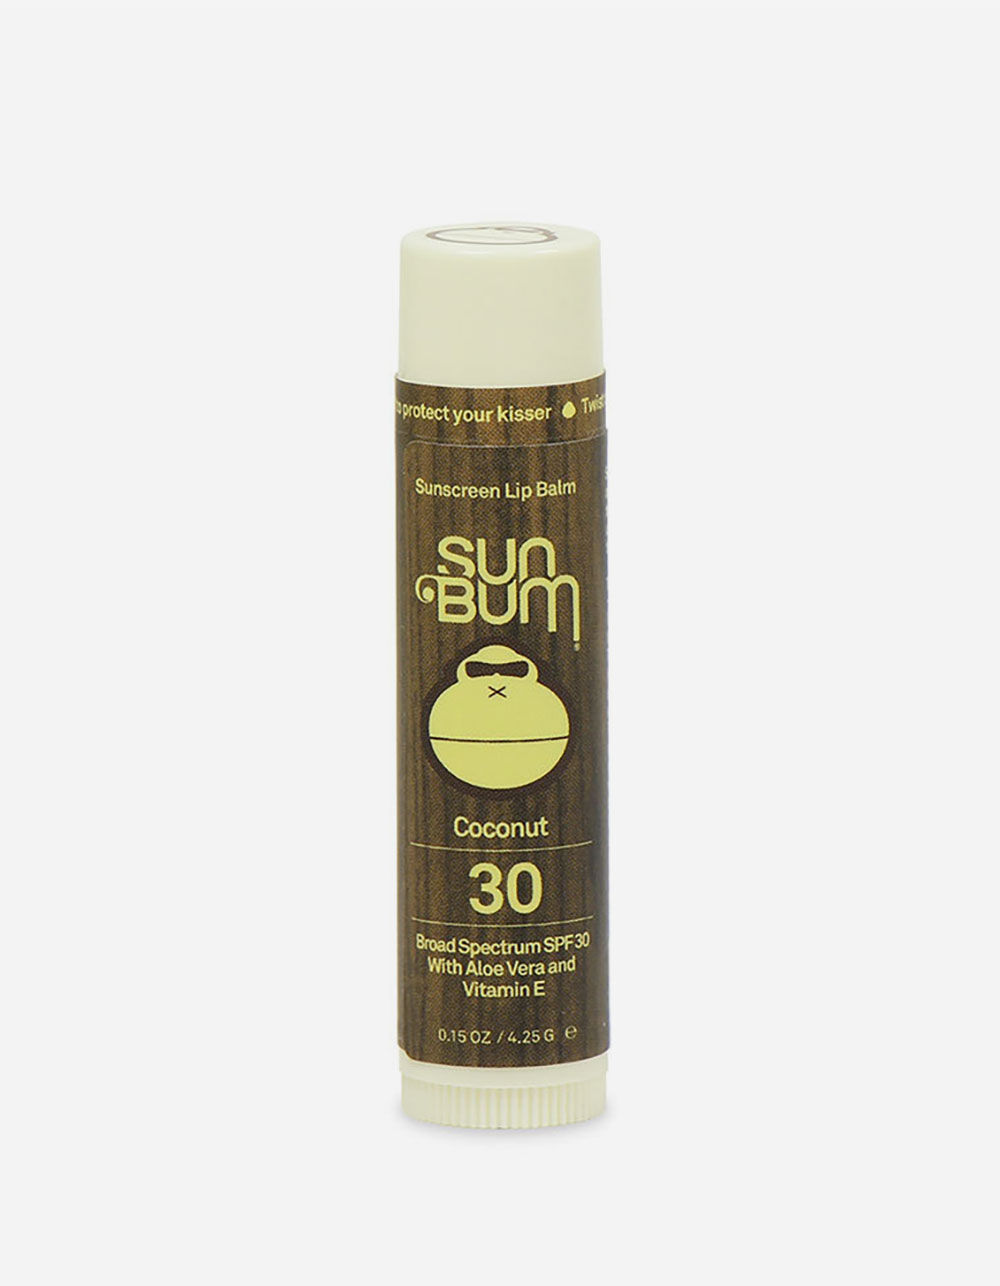 SUN BUM Coconut SPF 30 Lip Balm